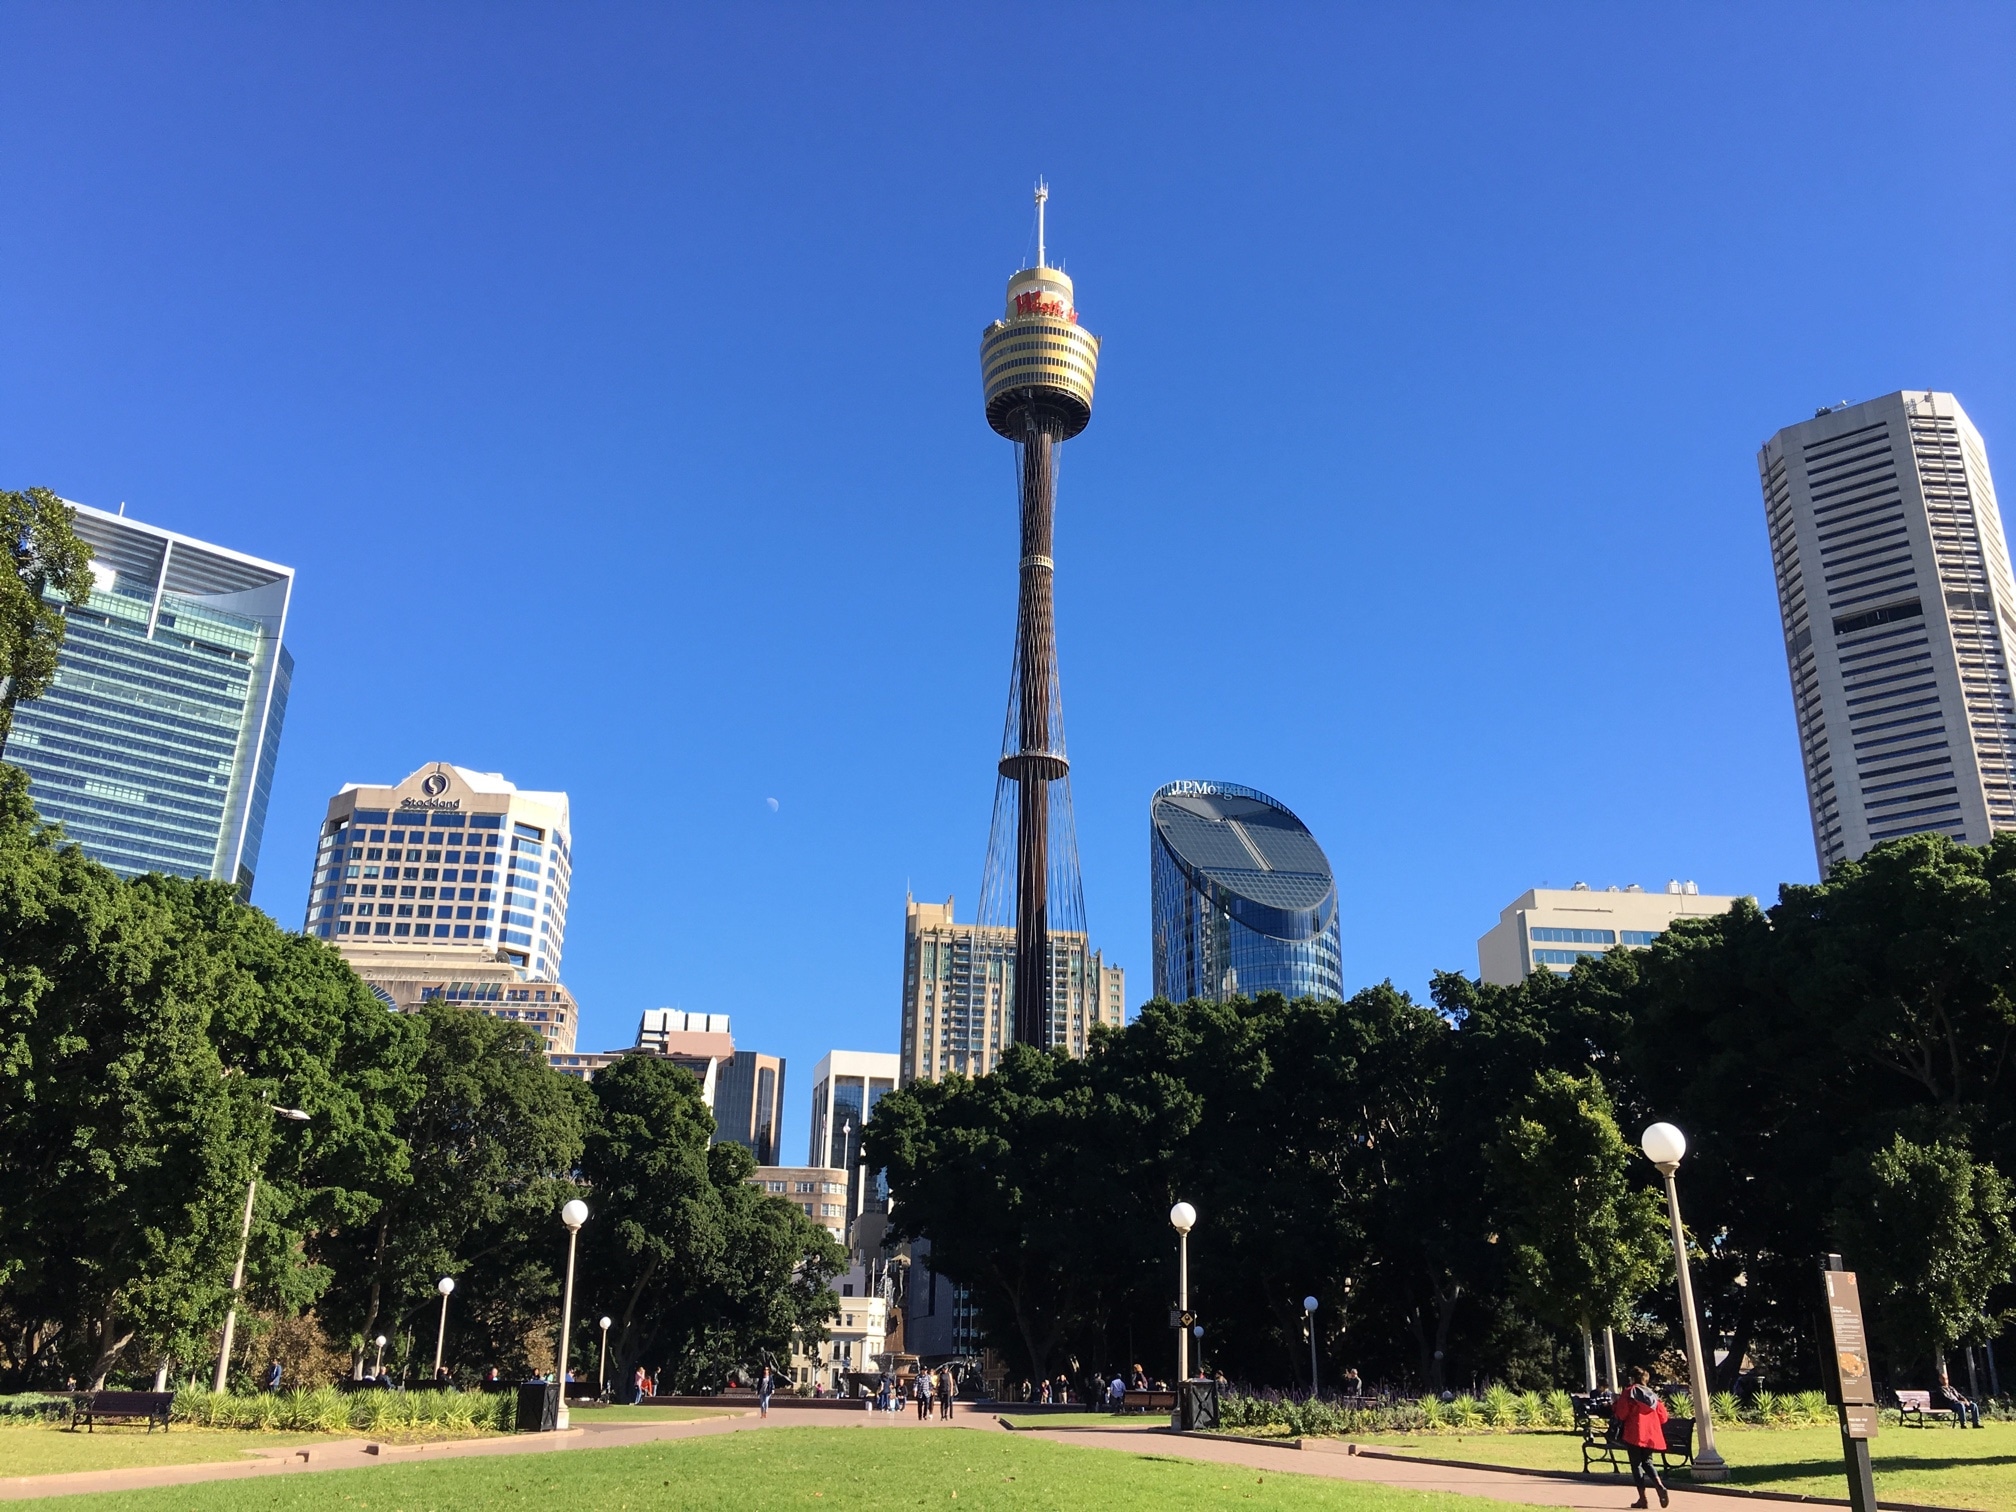 Sydney Tower Eye